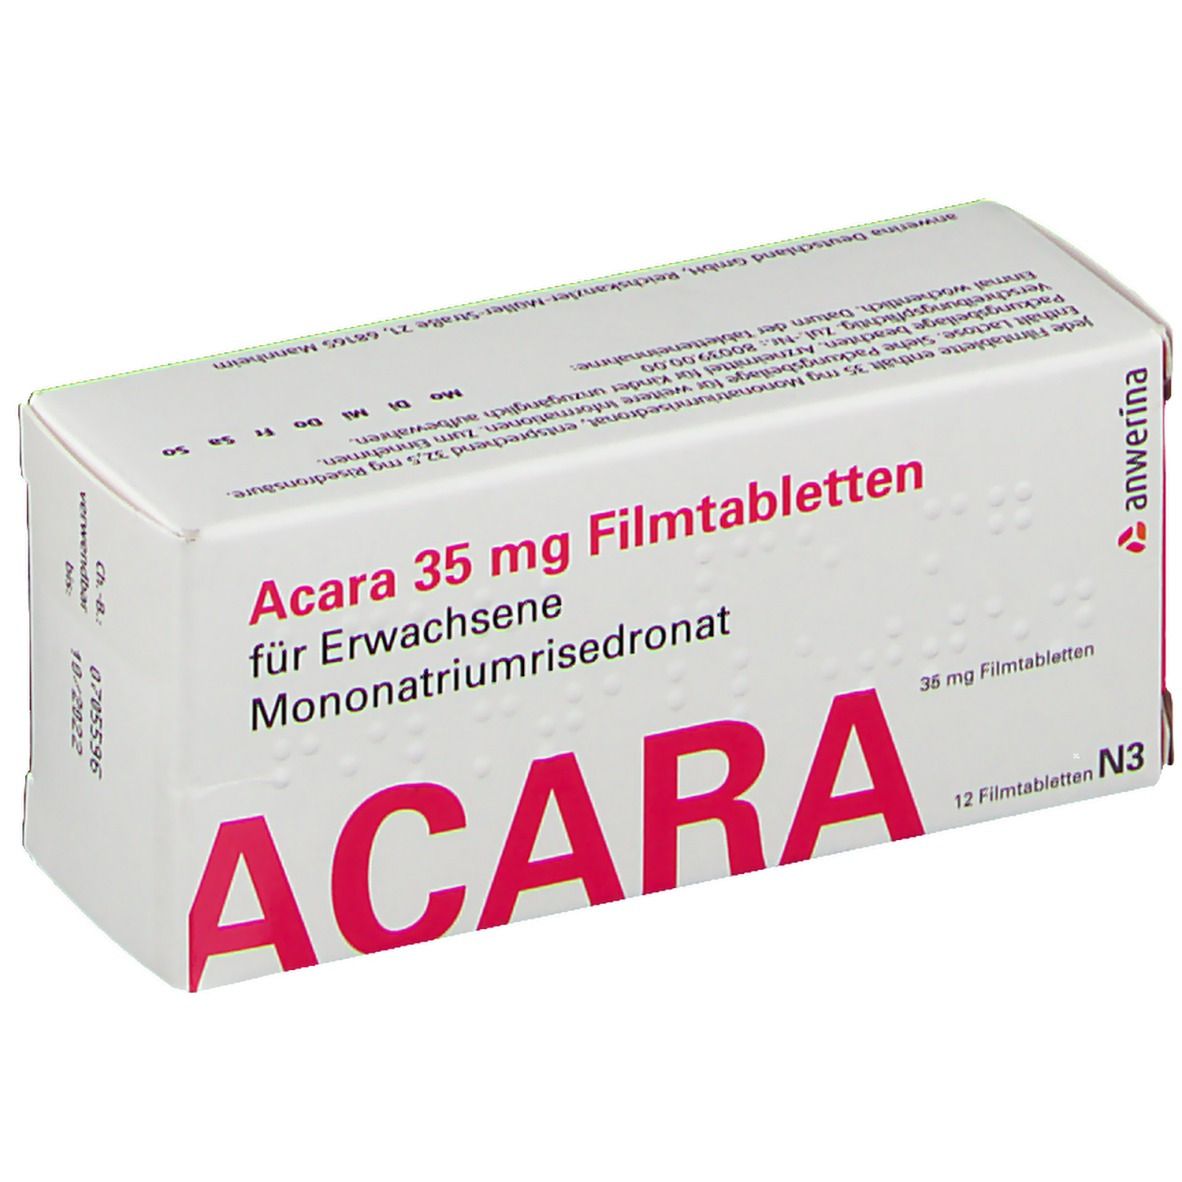 Acara 35 mg